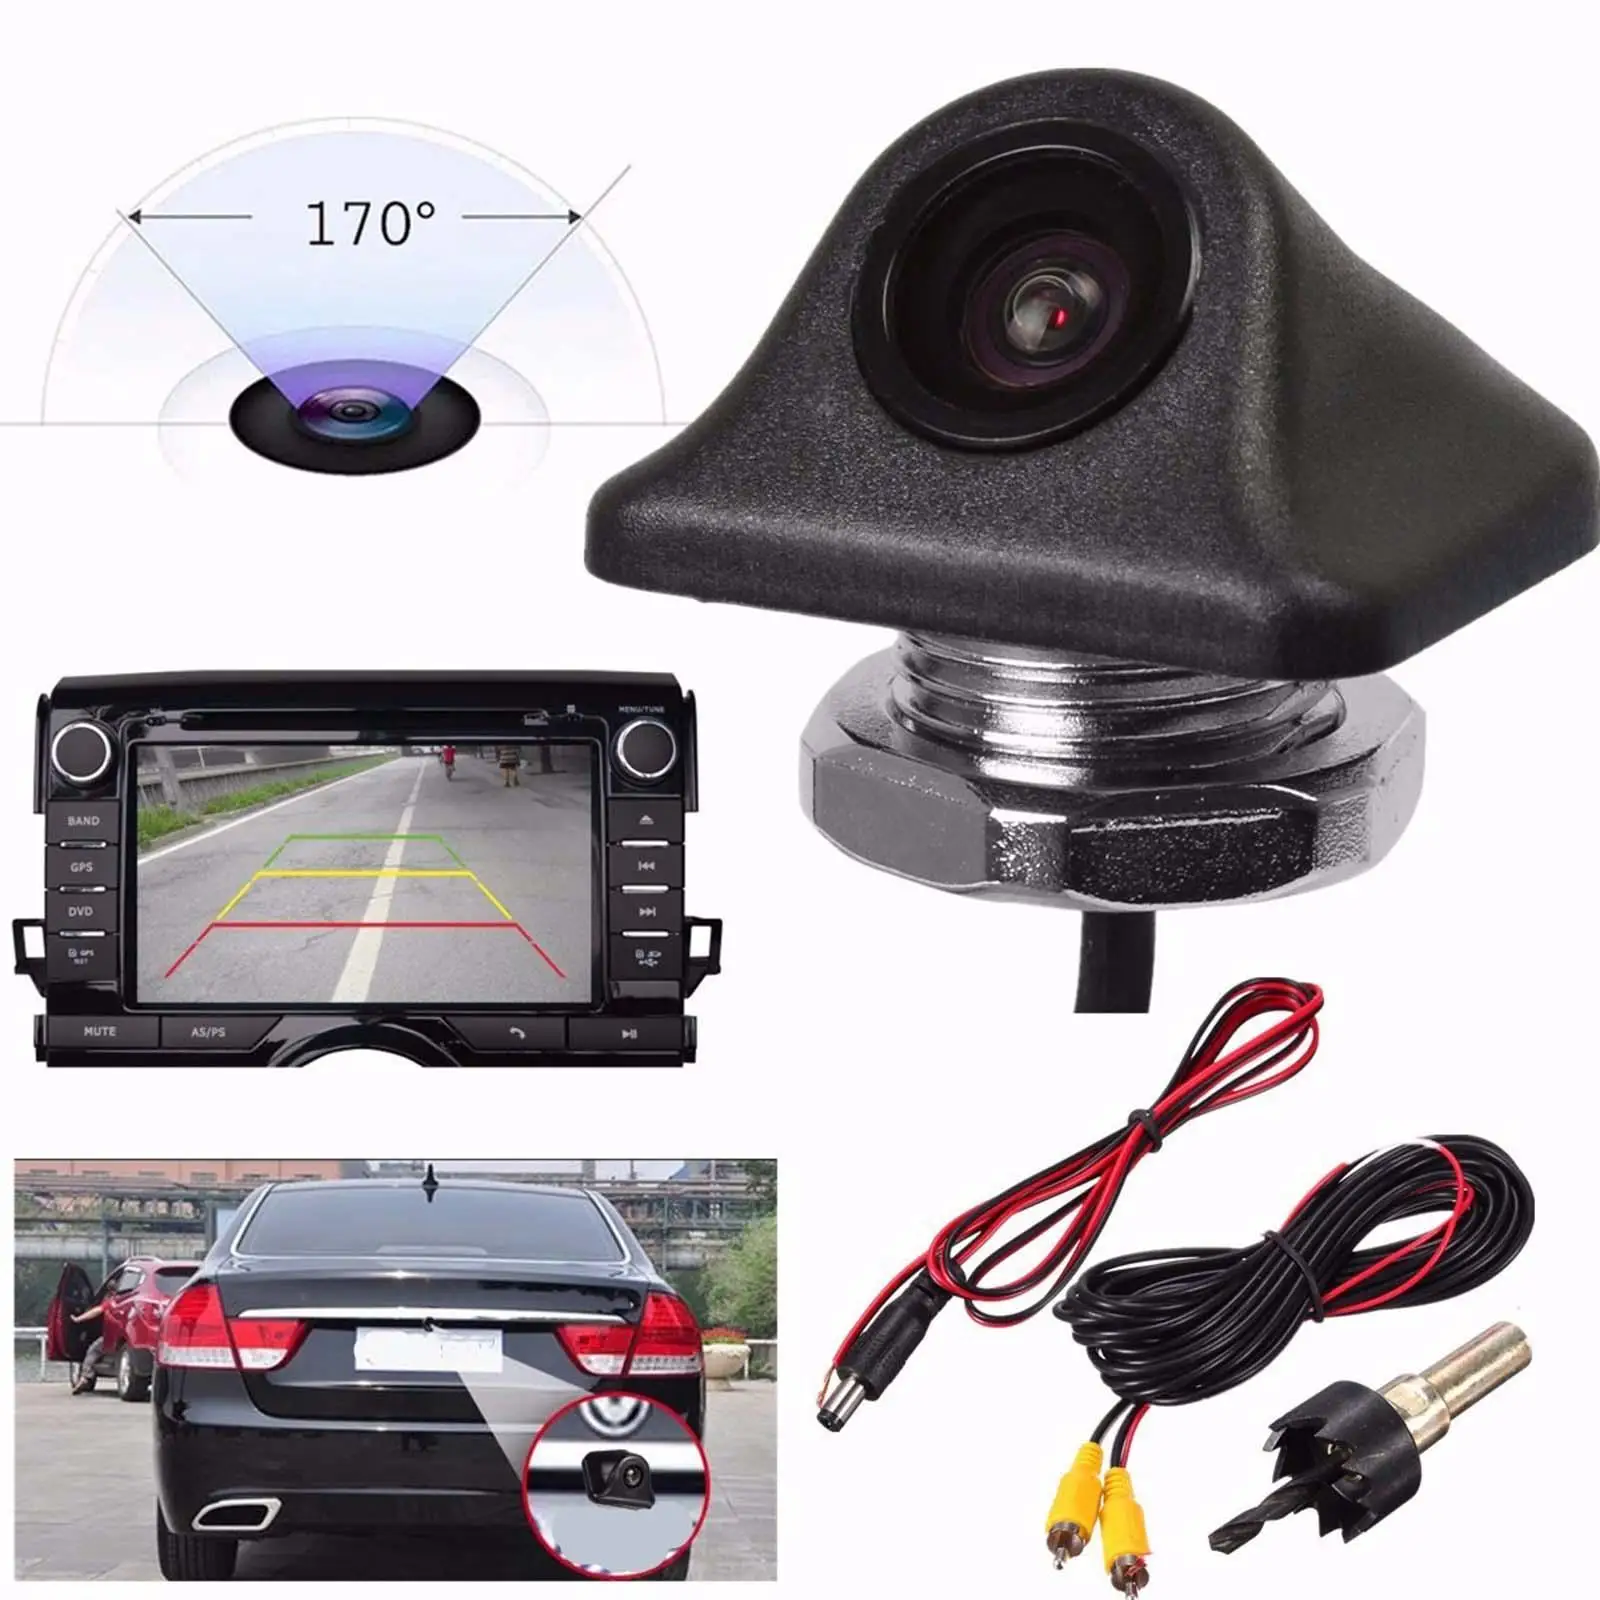 Universal Car Rear View Camera HD 170 Wide View Waterproof High Sensitivity Parking Reverse Backup Camera for Vehicle RV